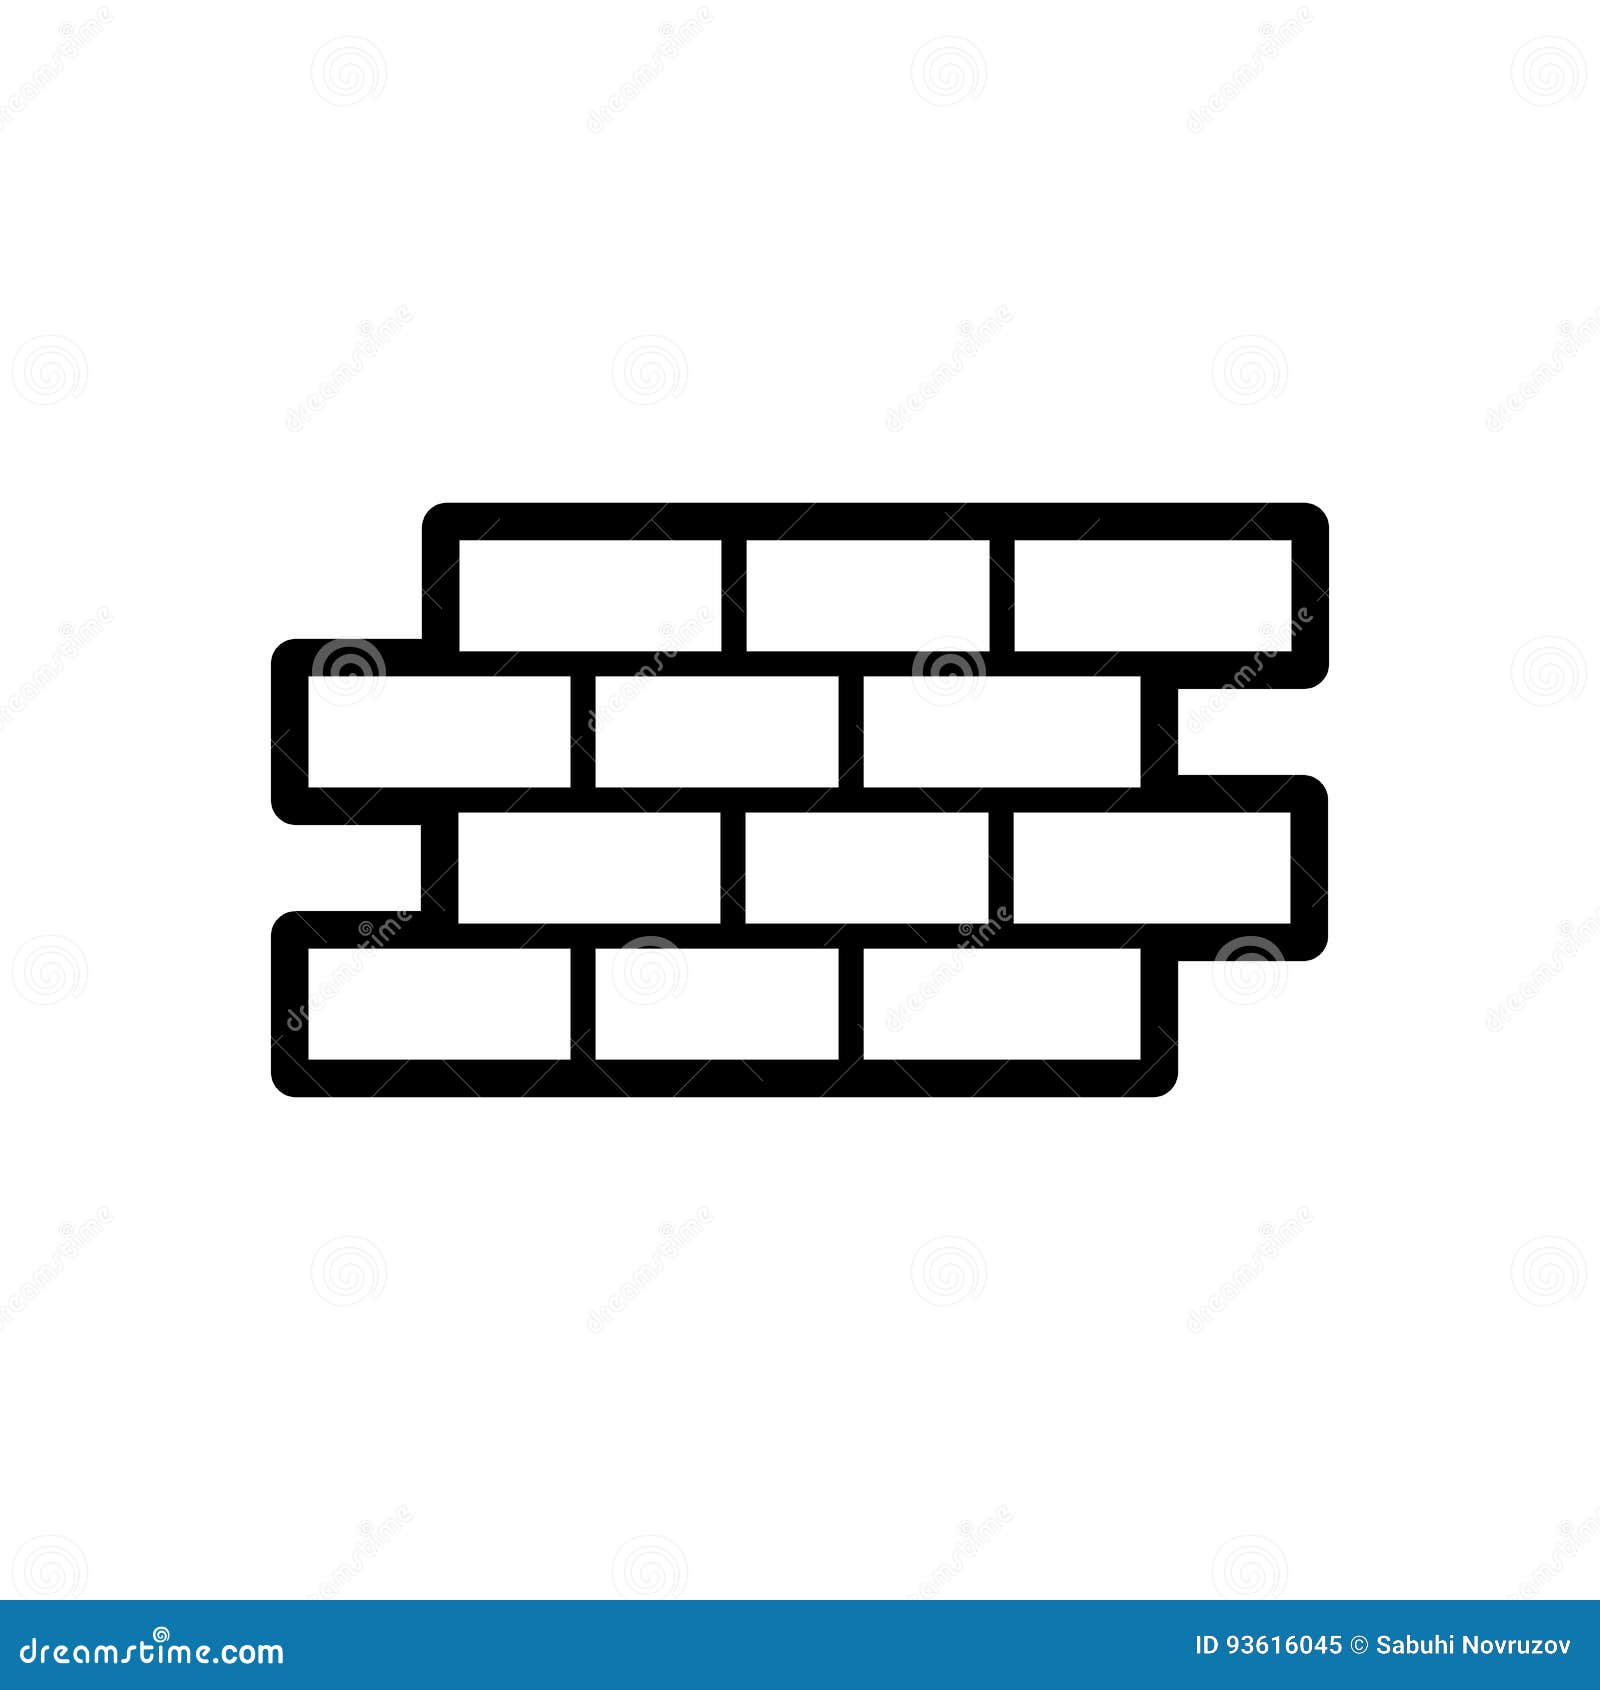 Bricks Simple Vector Icon. Black And White Illustration Of Brick